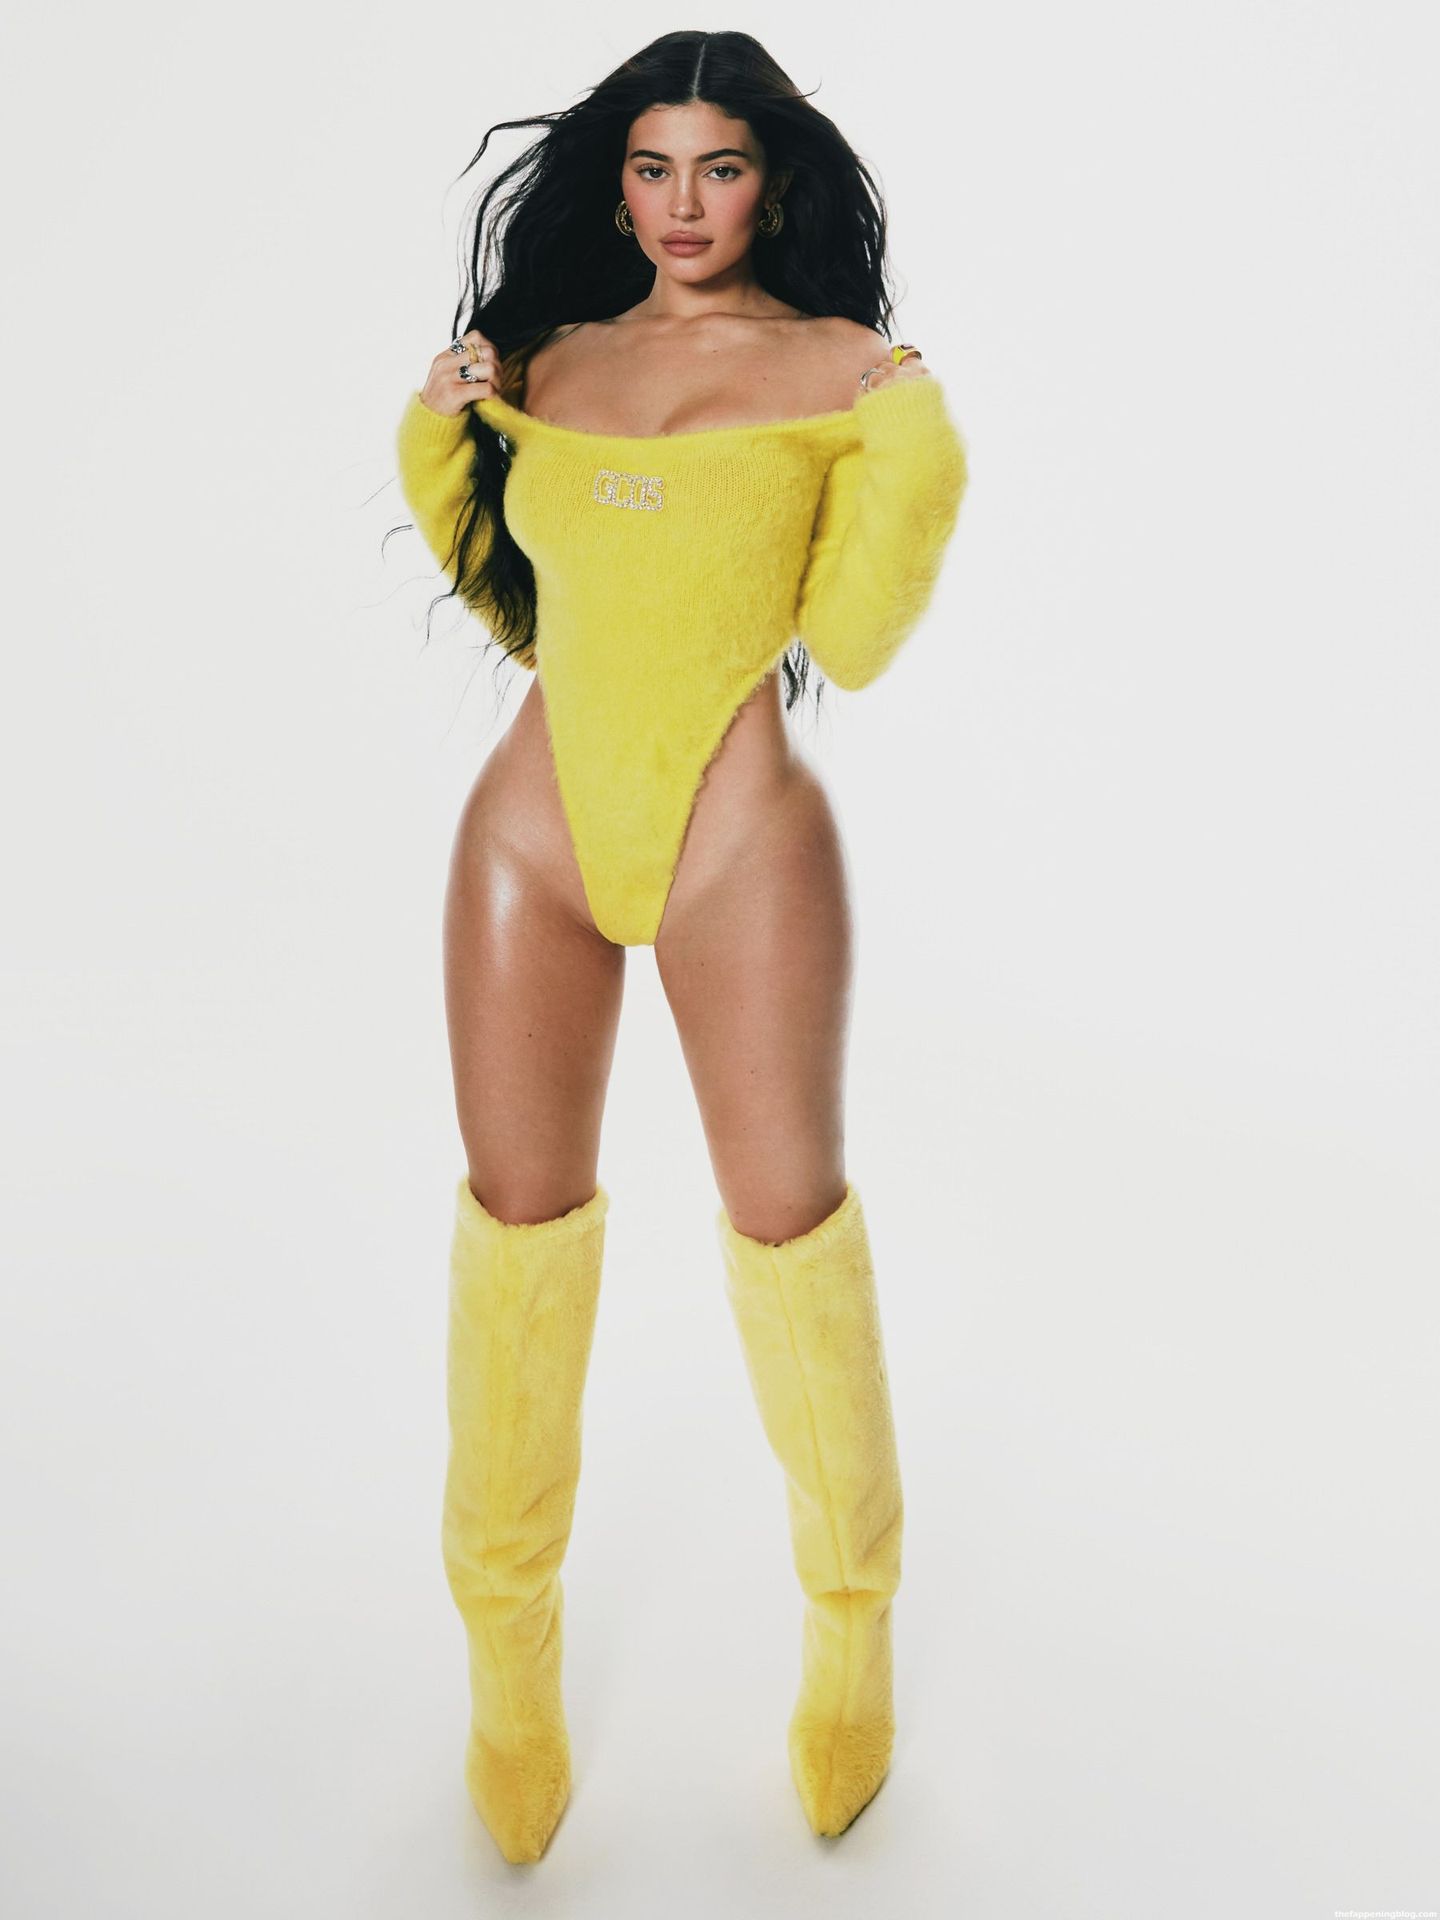 Kylie-Jenner-Sexy-Photoshoot-51-thefappeningblog.com_.jpg